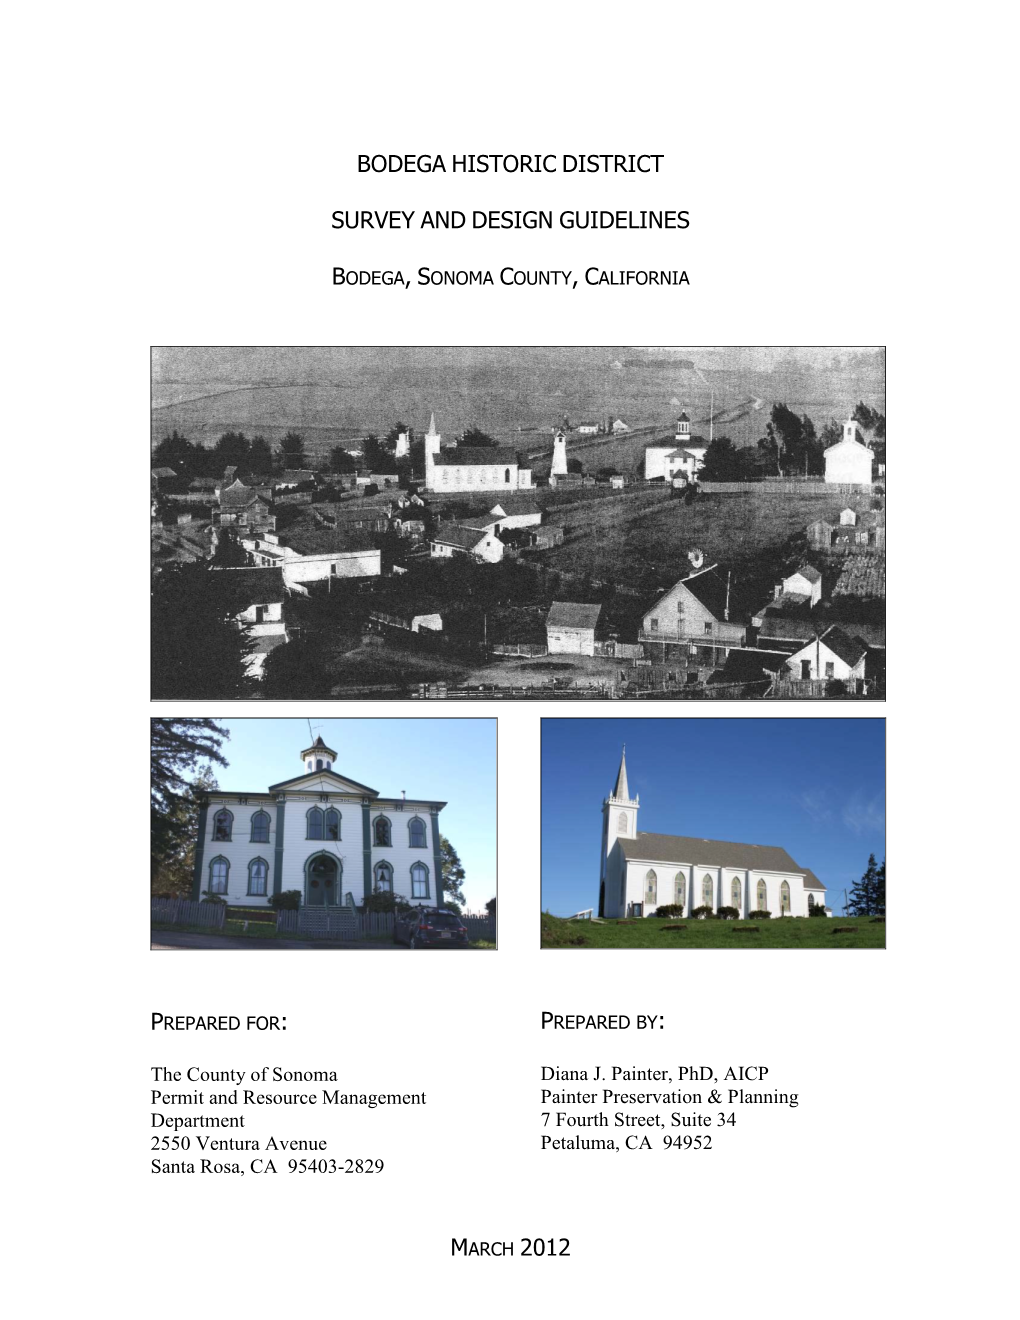 Bodega Historic District Survey and Design Guidelines